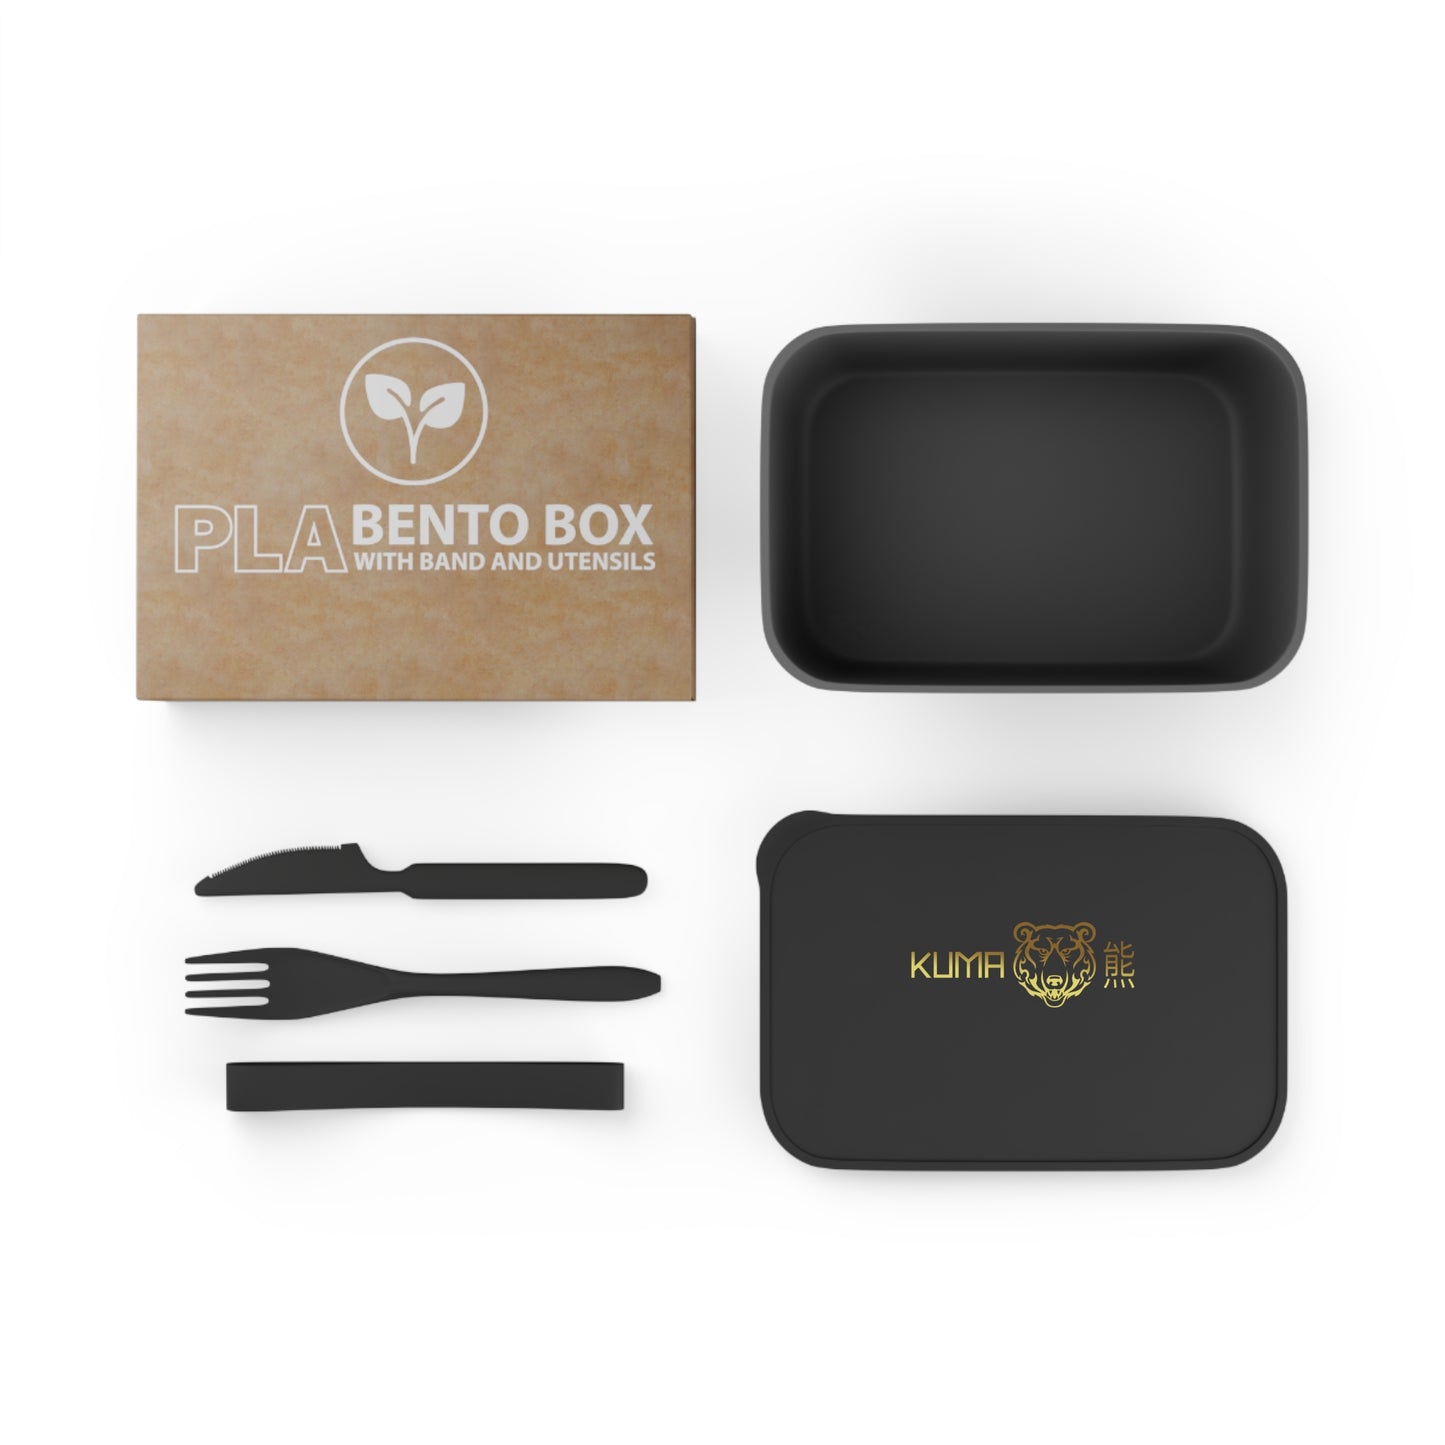 KUMA PLA Bento Box with Band and Utensils